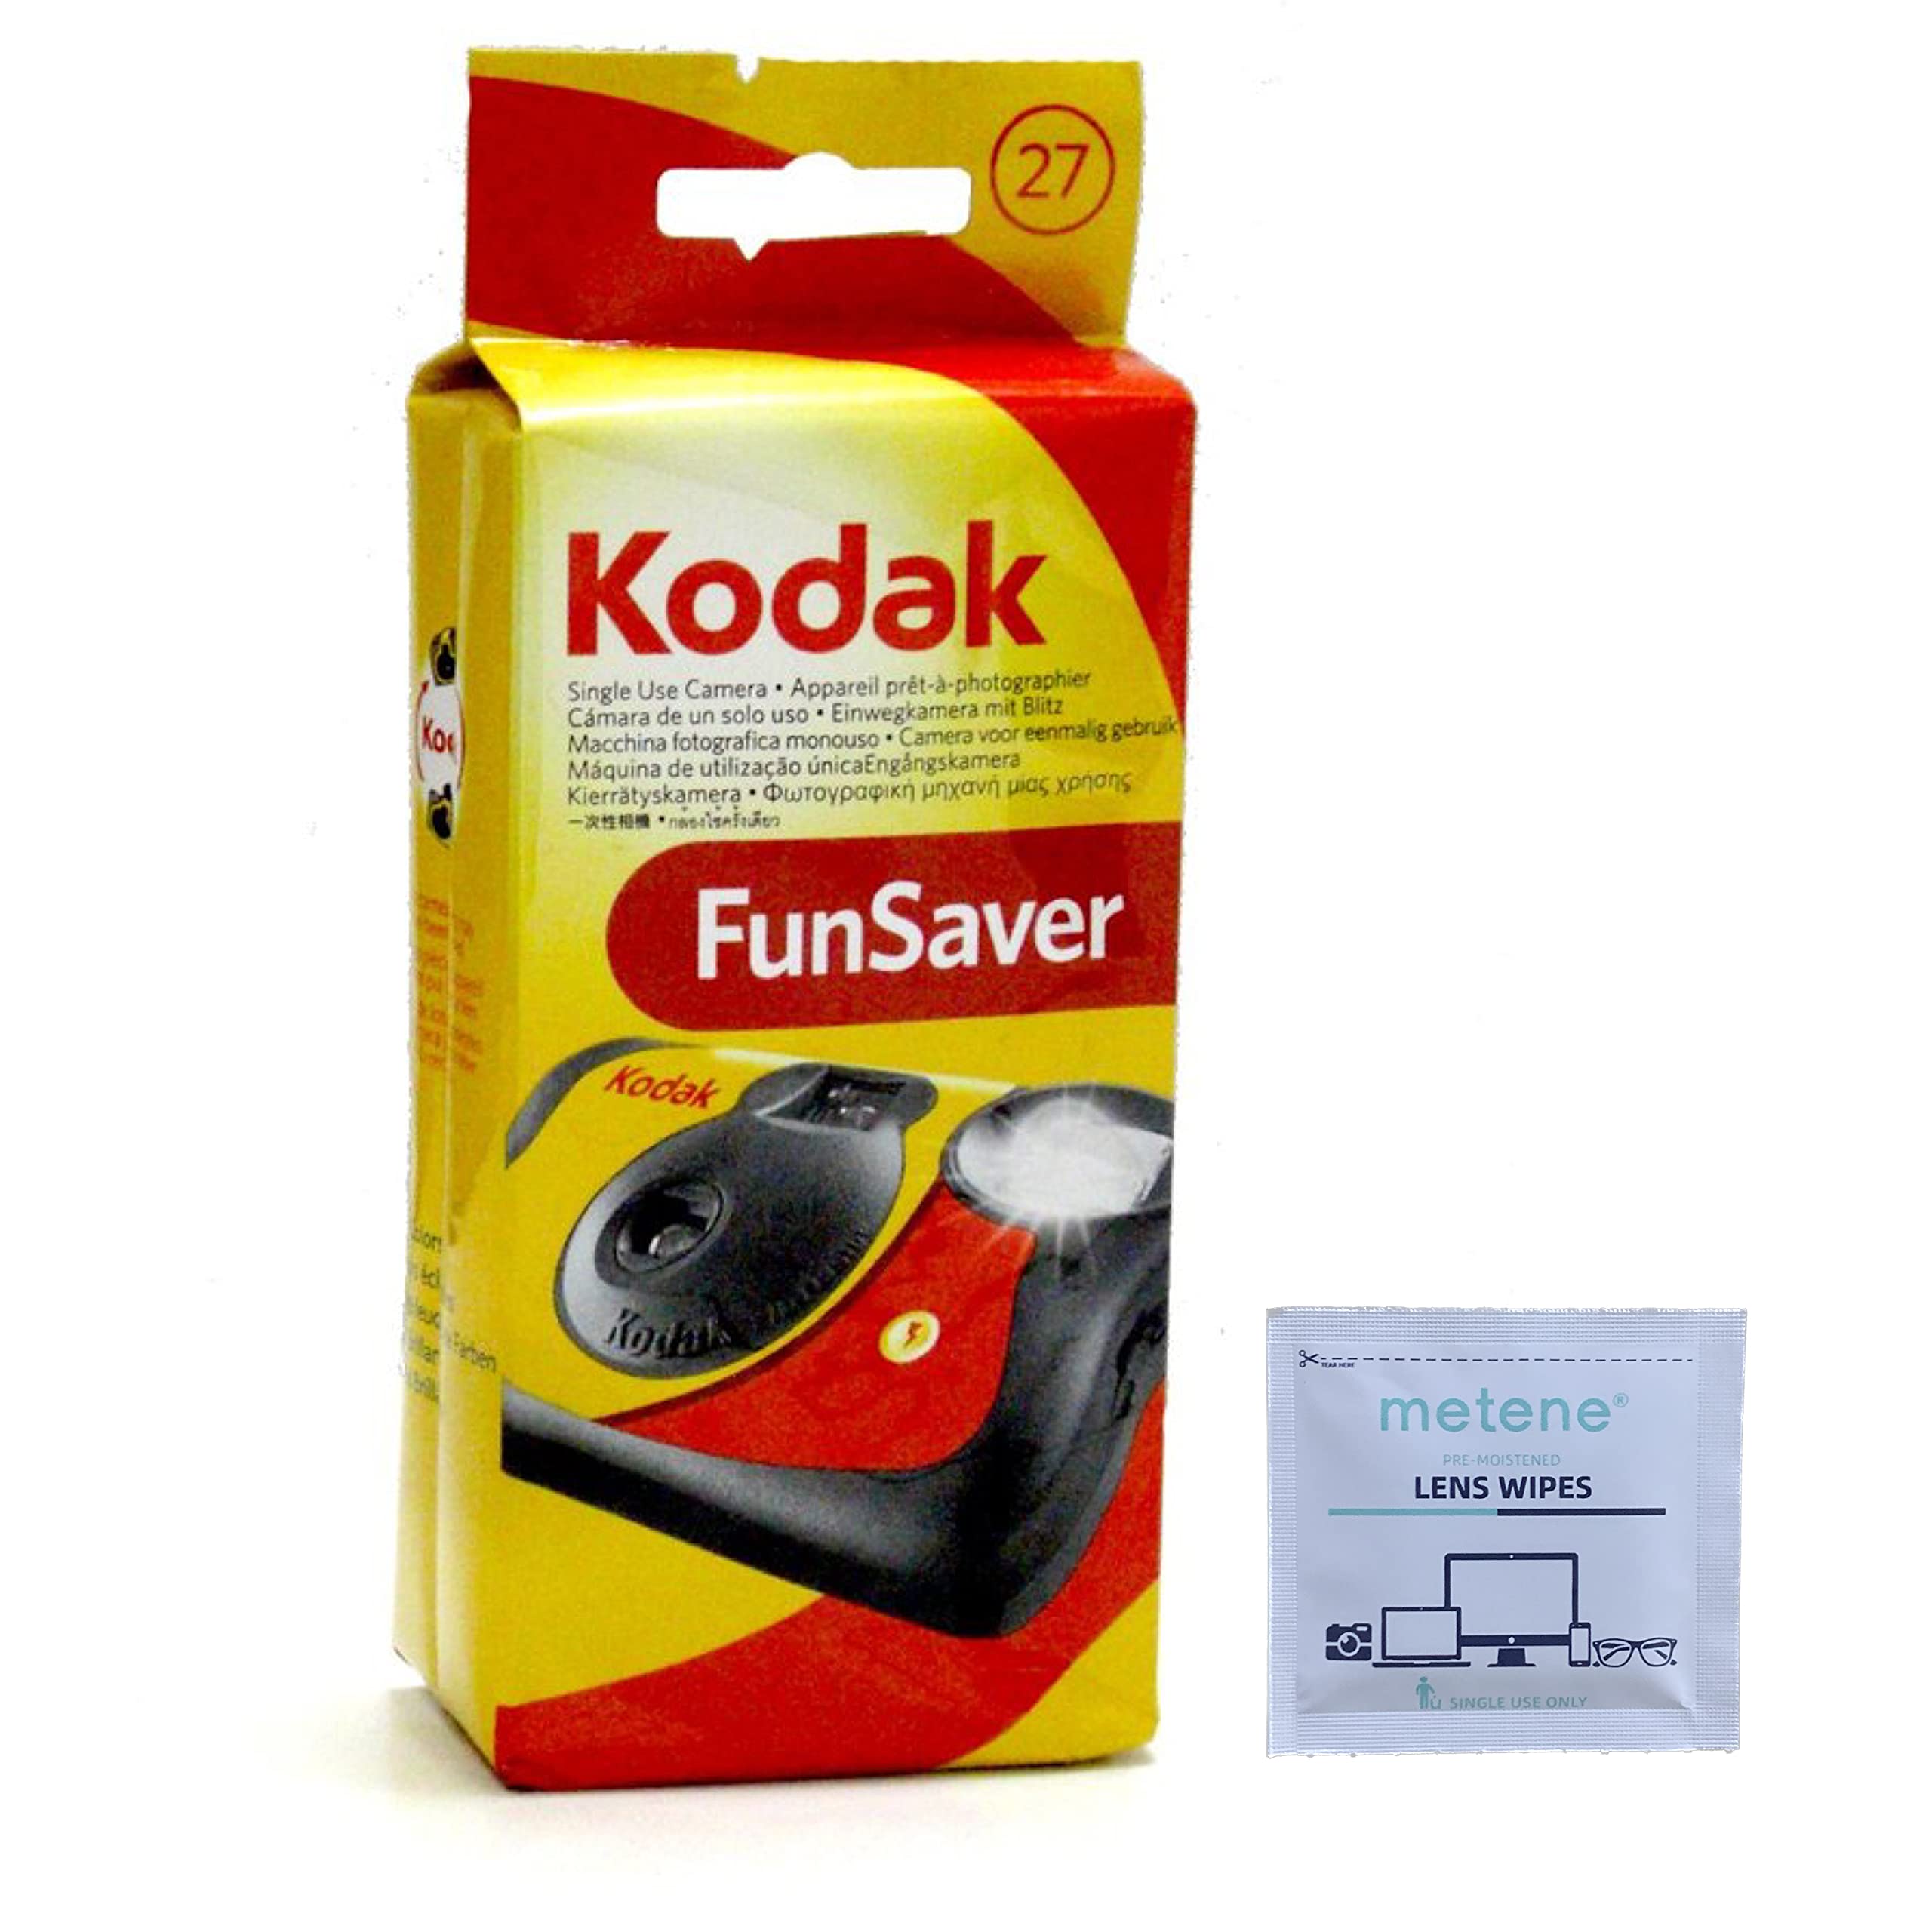 Kodak फन सेवर सिंगल यूज़ कैमरा (6-पैक) बंडल (6 आइटम)